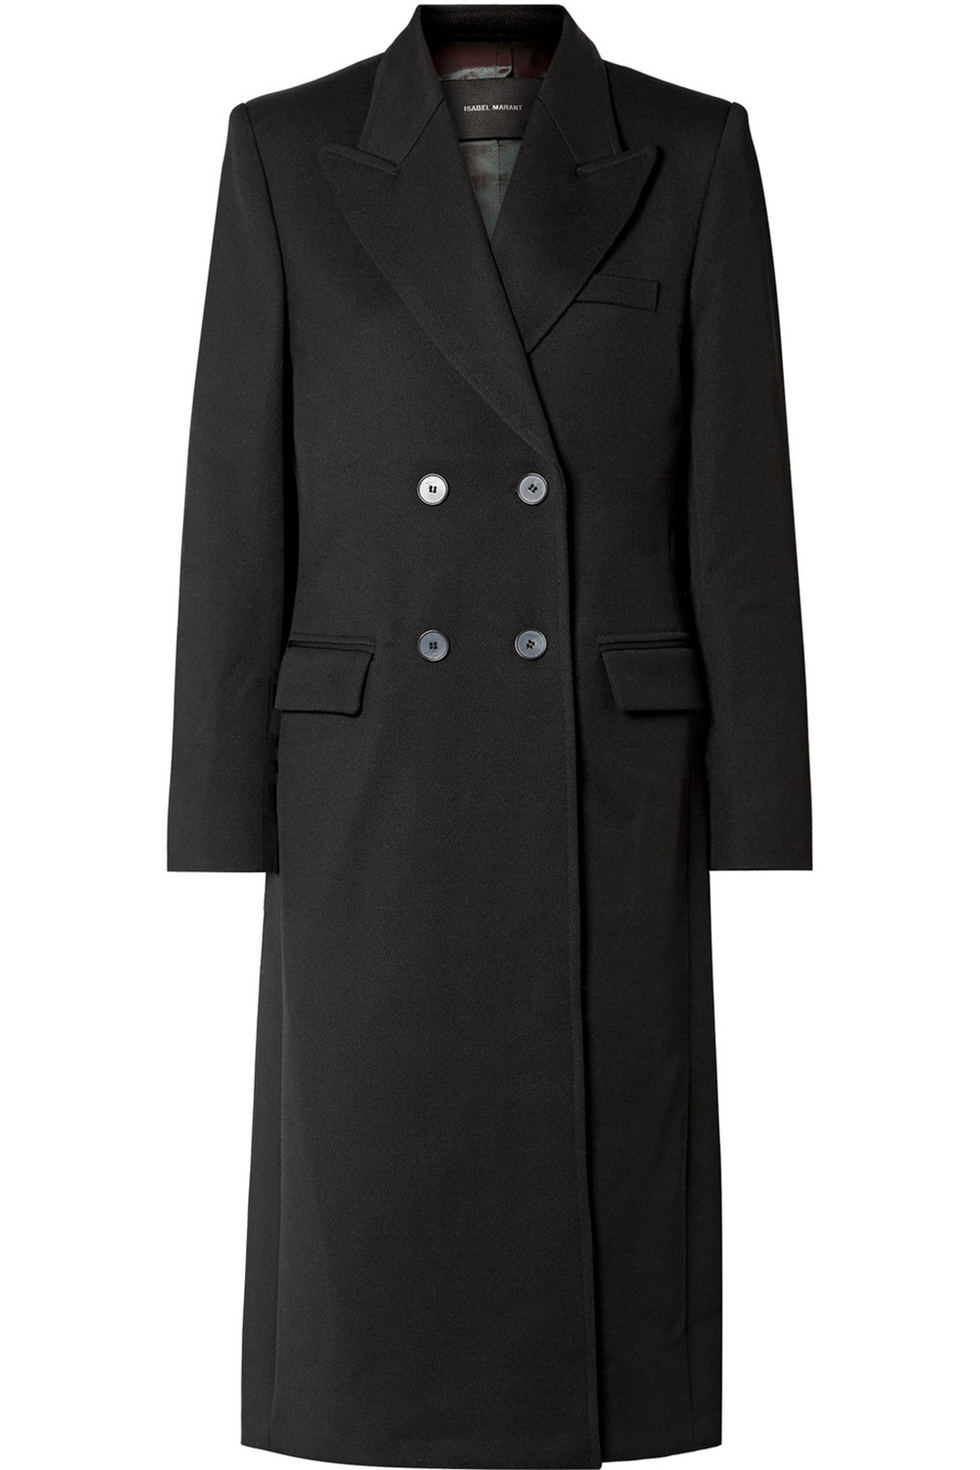 Clothing, Coat, Overcoat, Outerwear, Trench coat, Sleeve, Collar, Formal wear, Suit, Frock coat, 